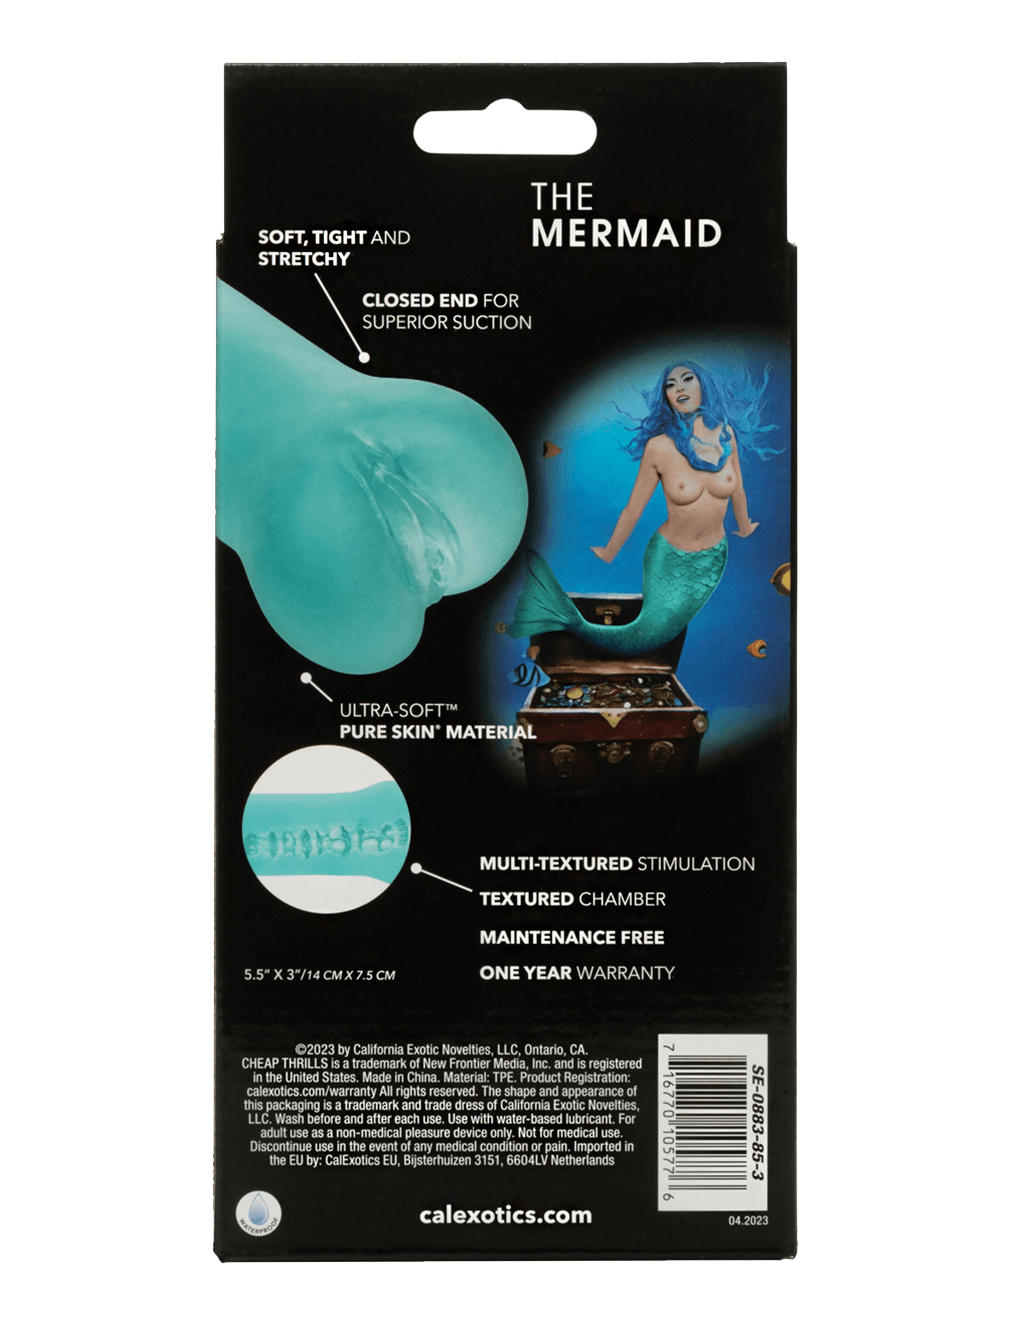 Cheap Thrills The Mermaid - Box Back